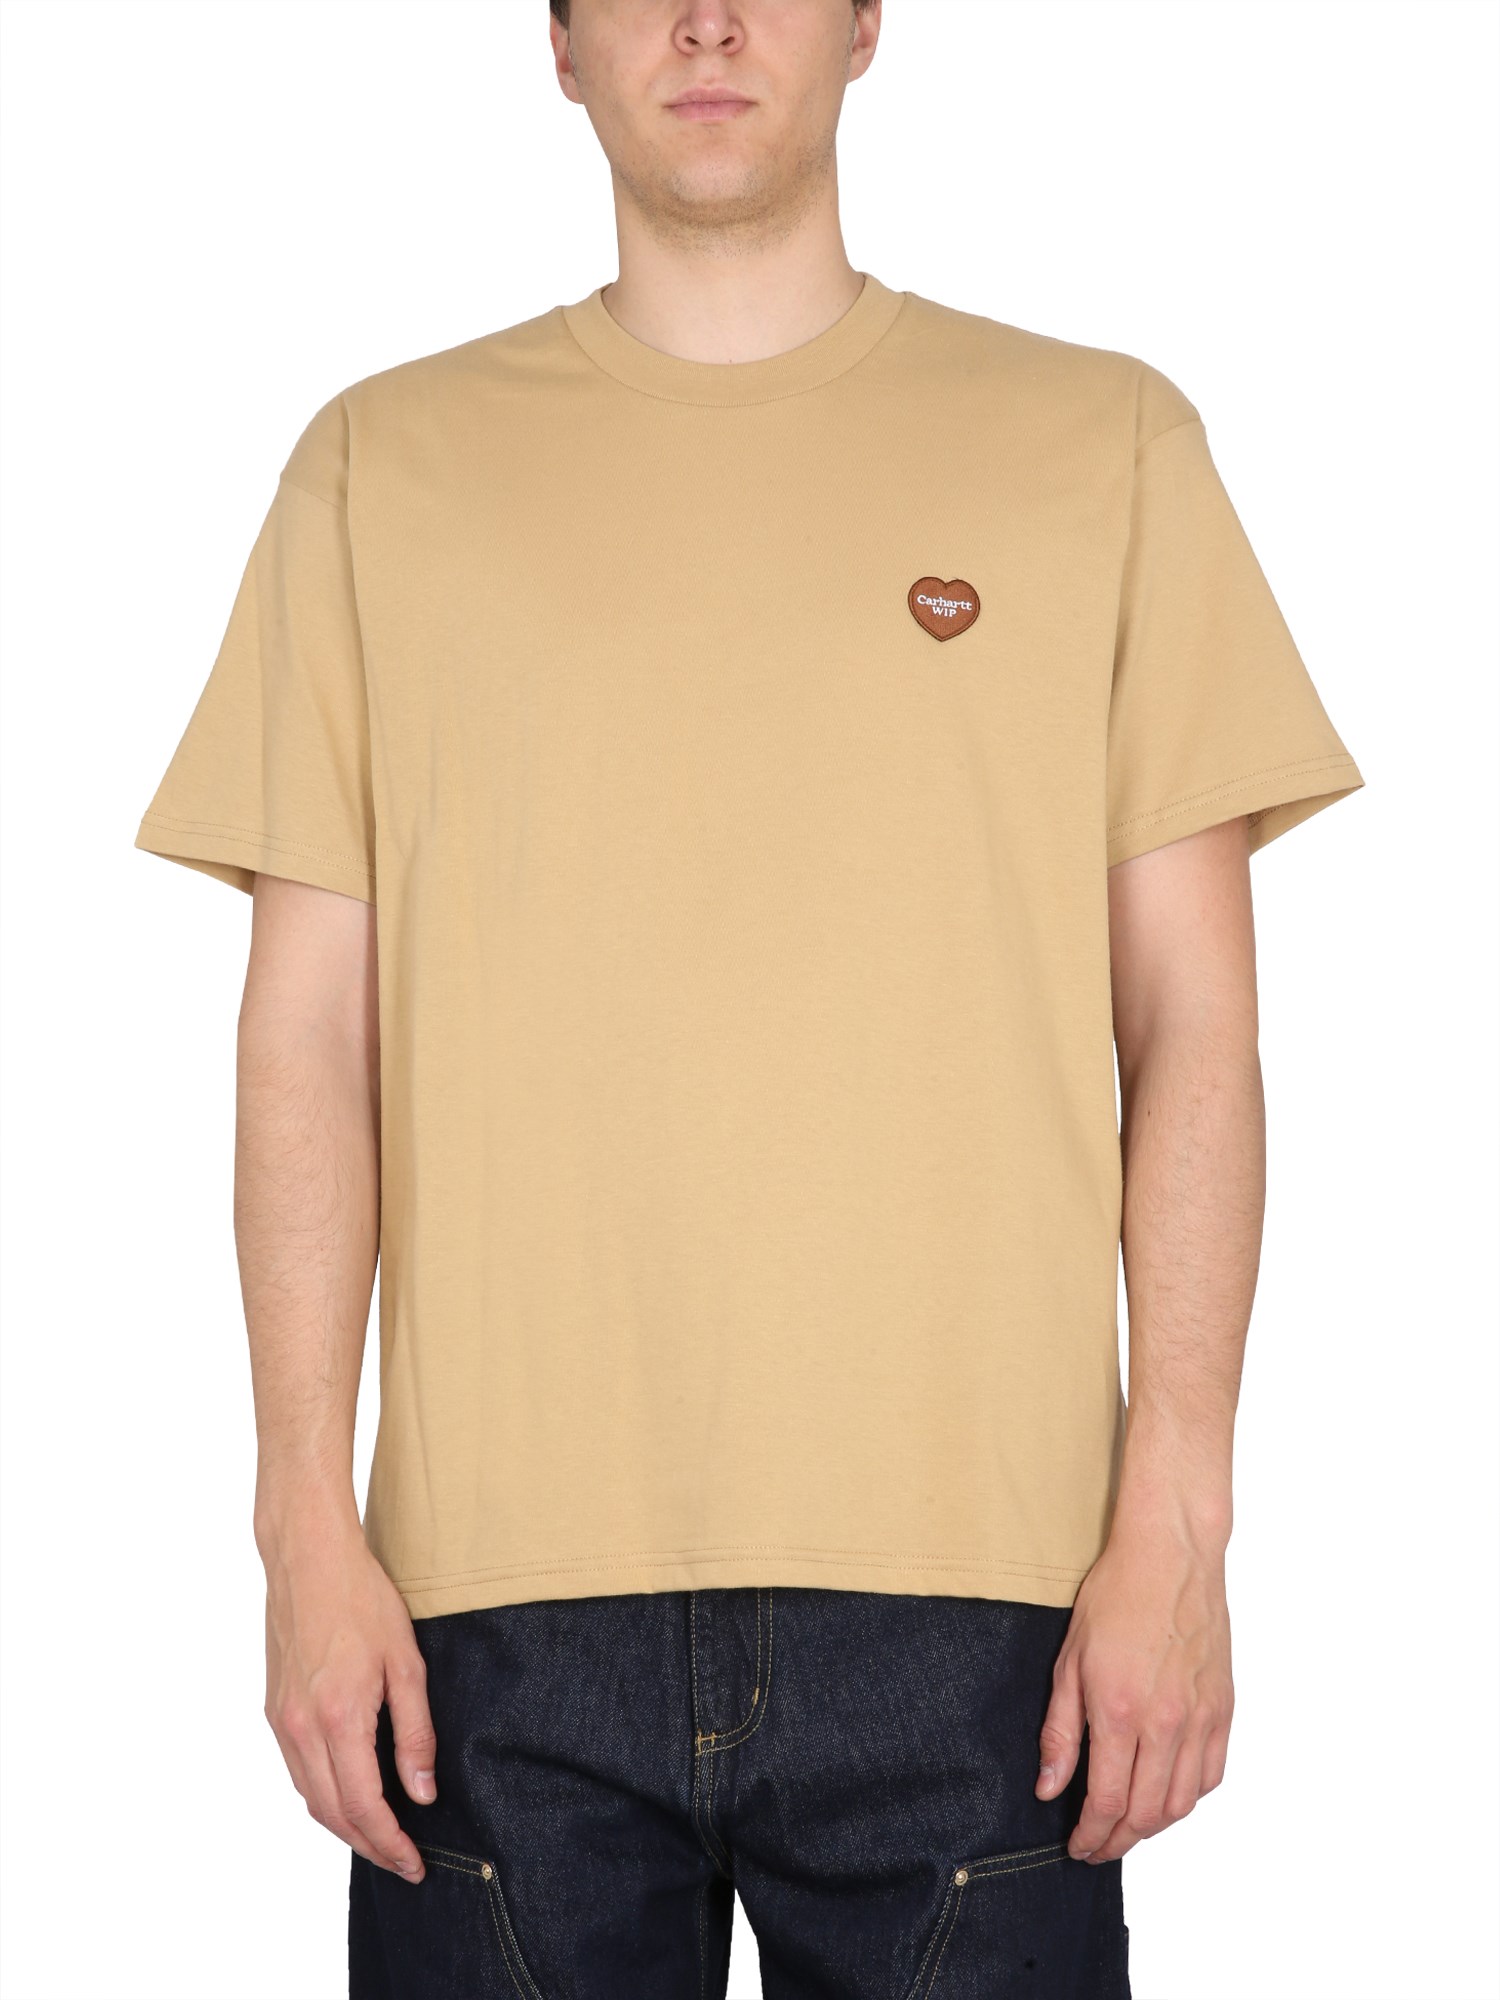 Carhartt T-shirt S/s Double Heart In Brown